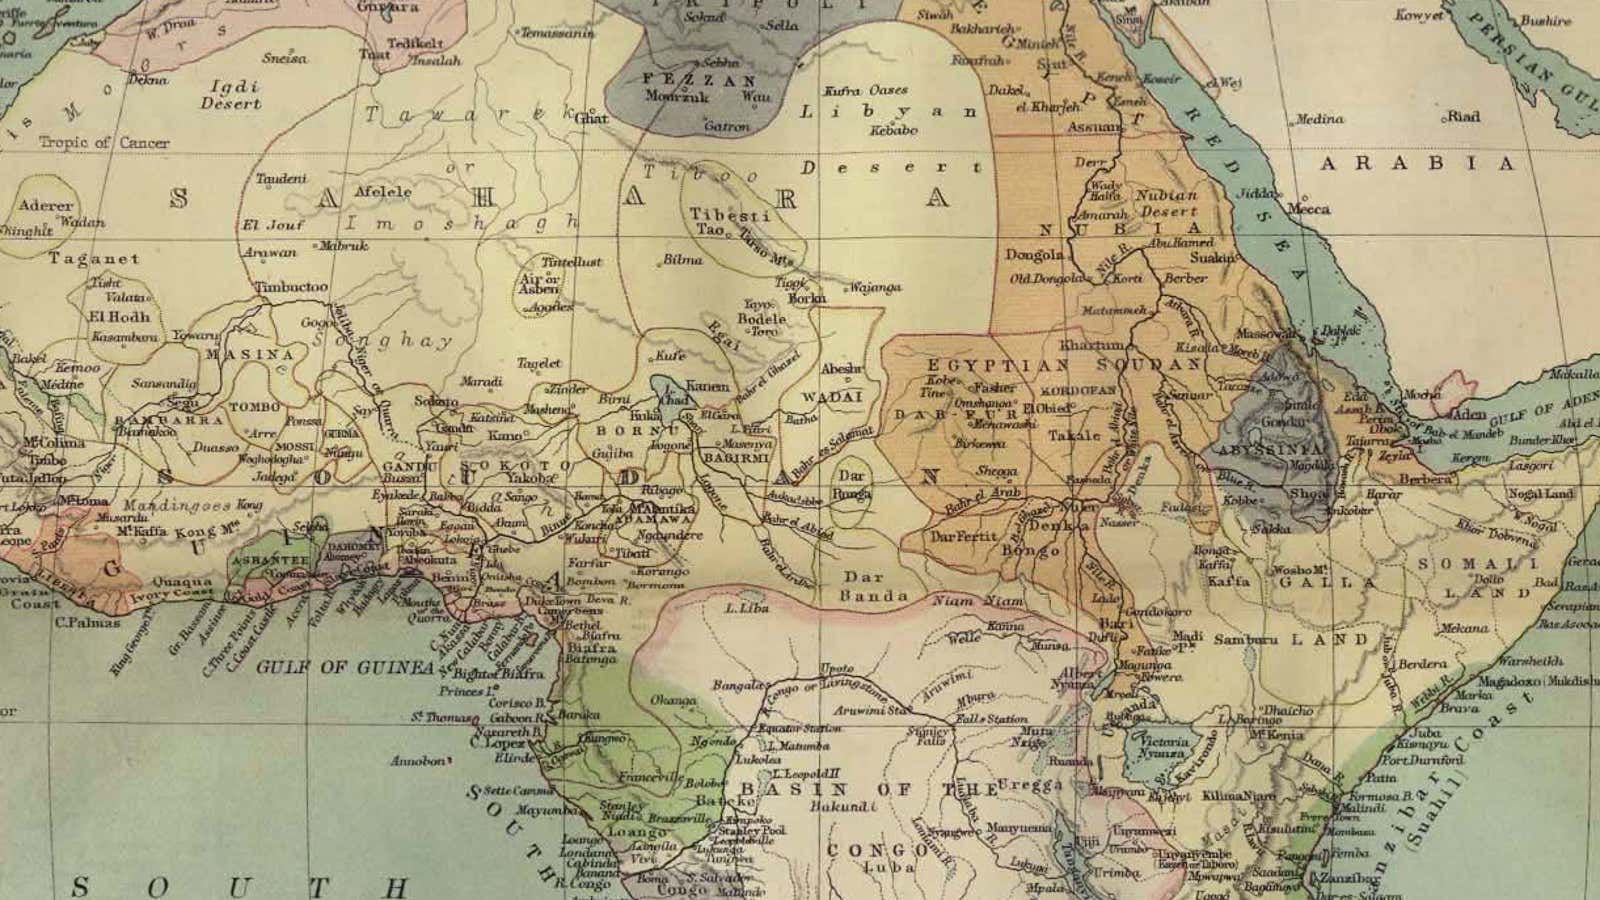 Africa in 1885